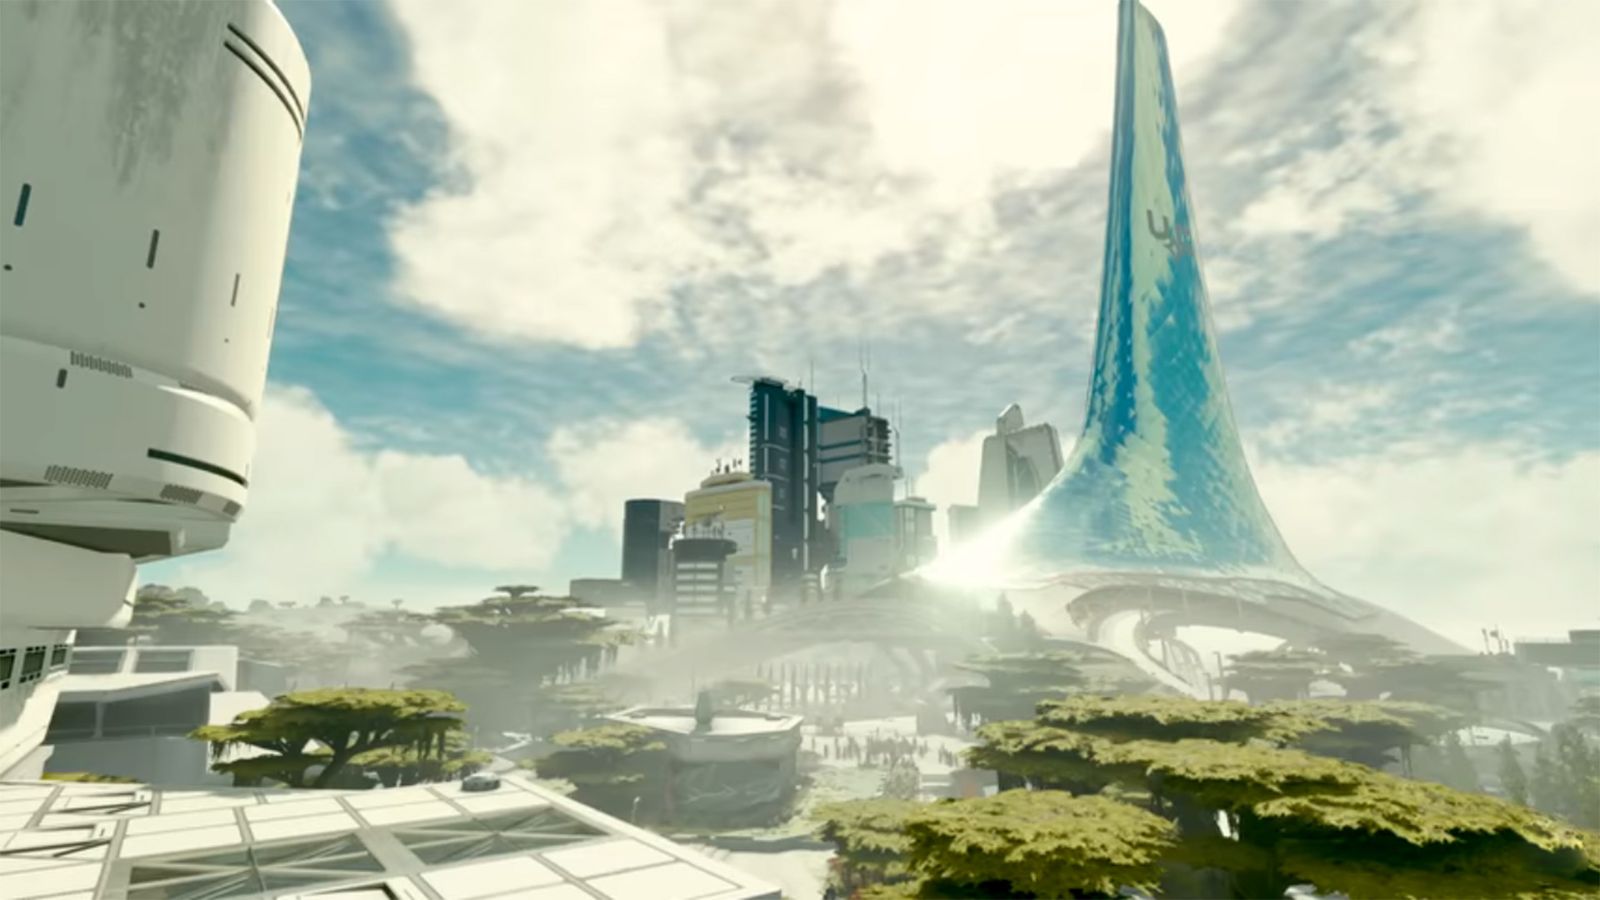 The city of New Atlantis